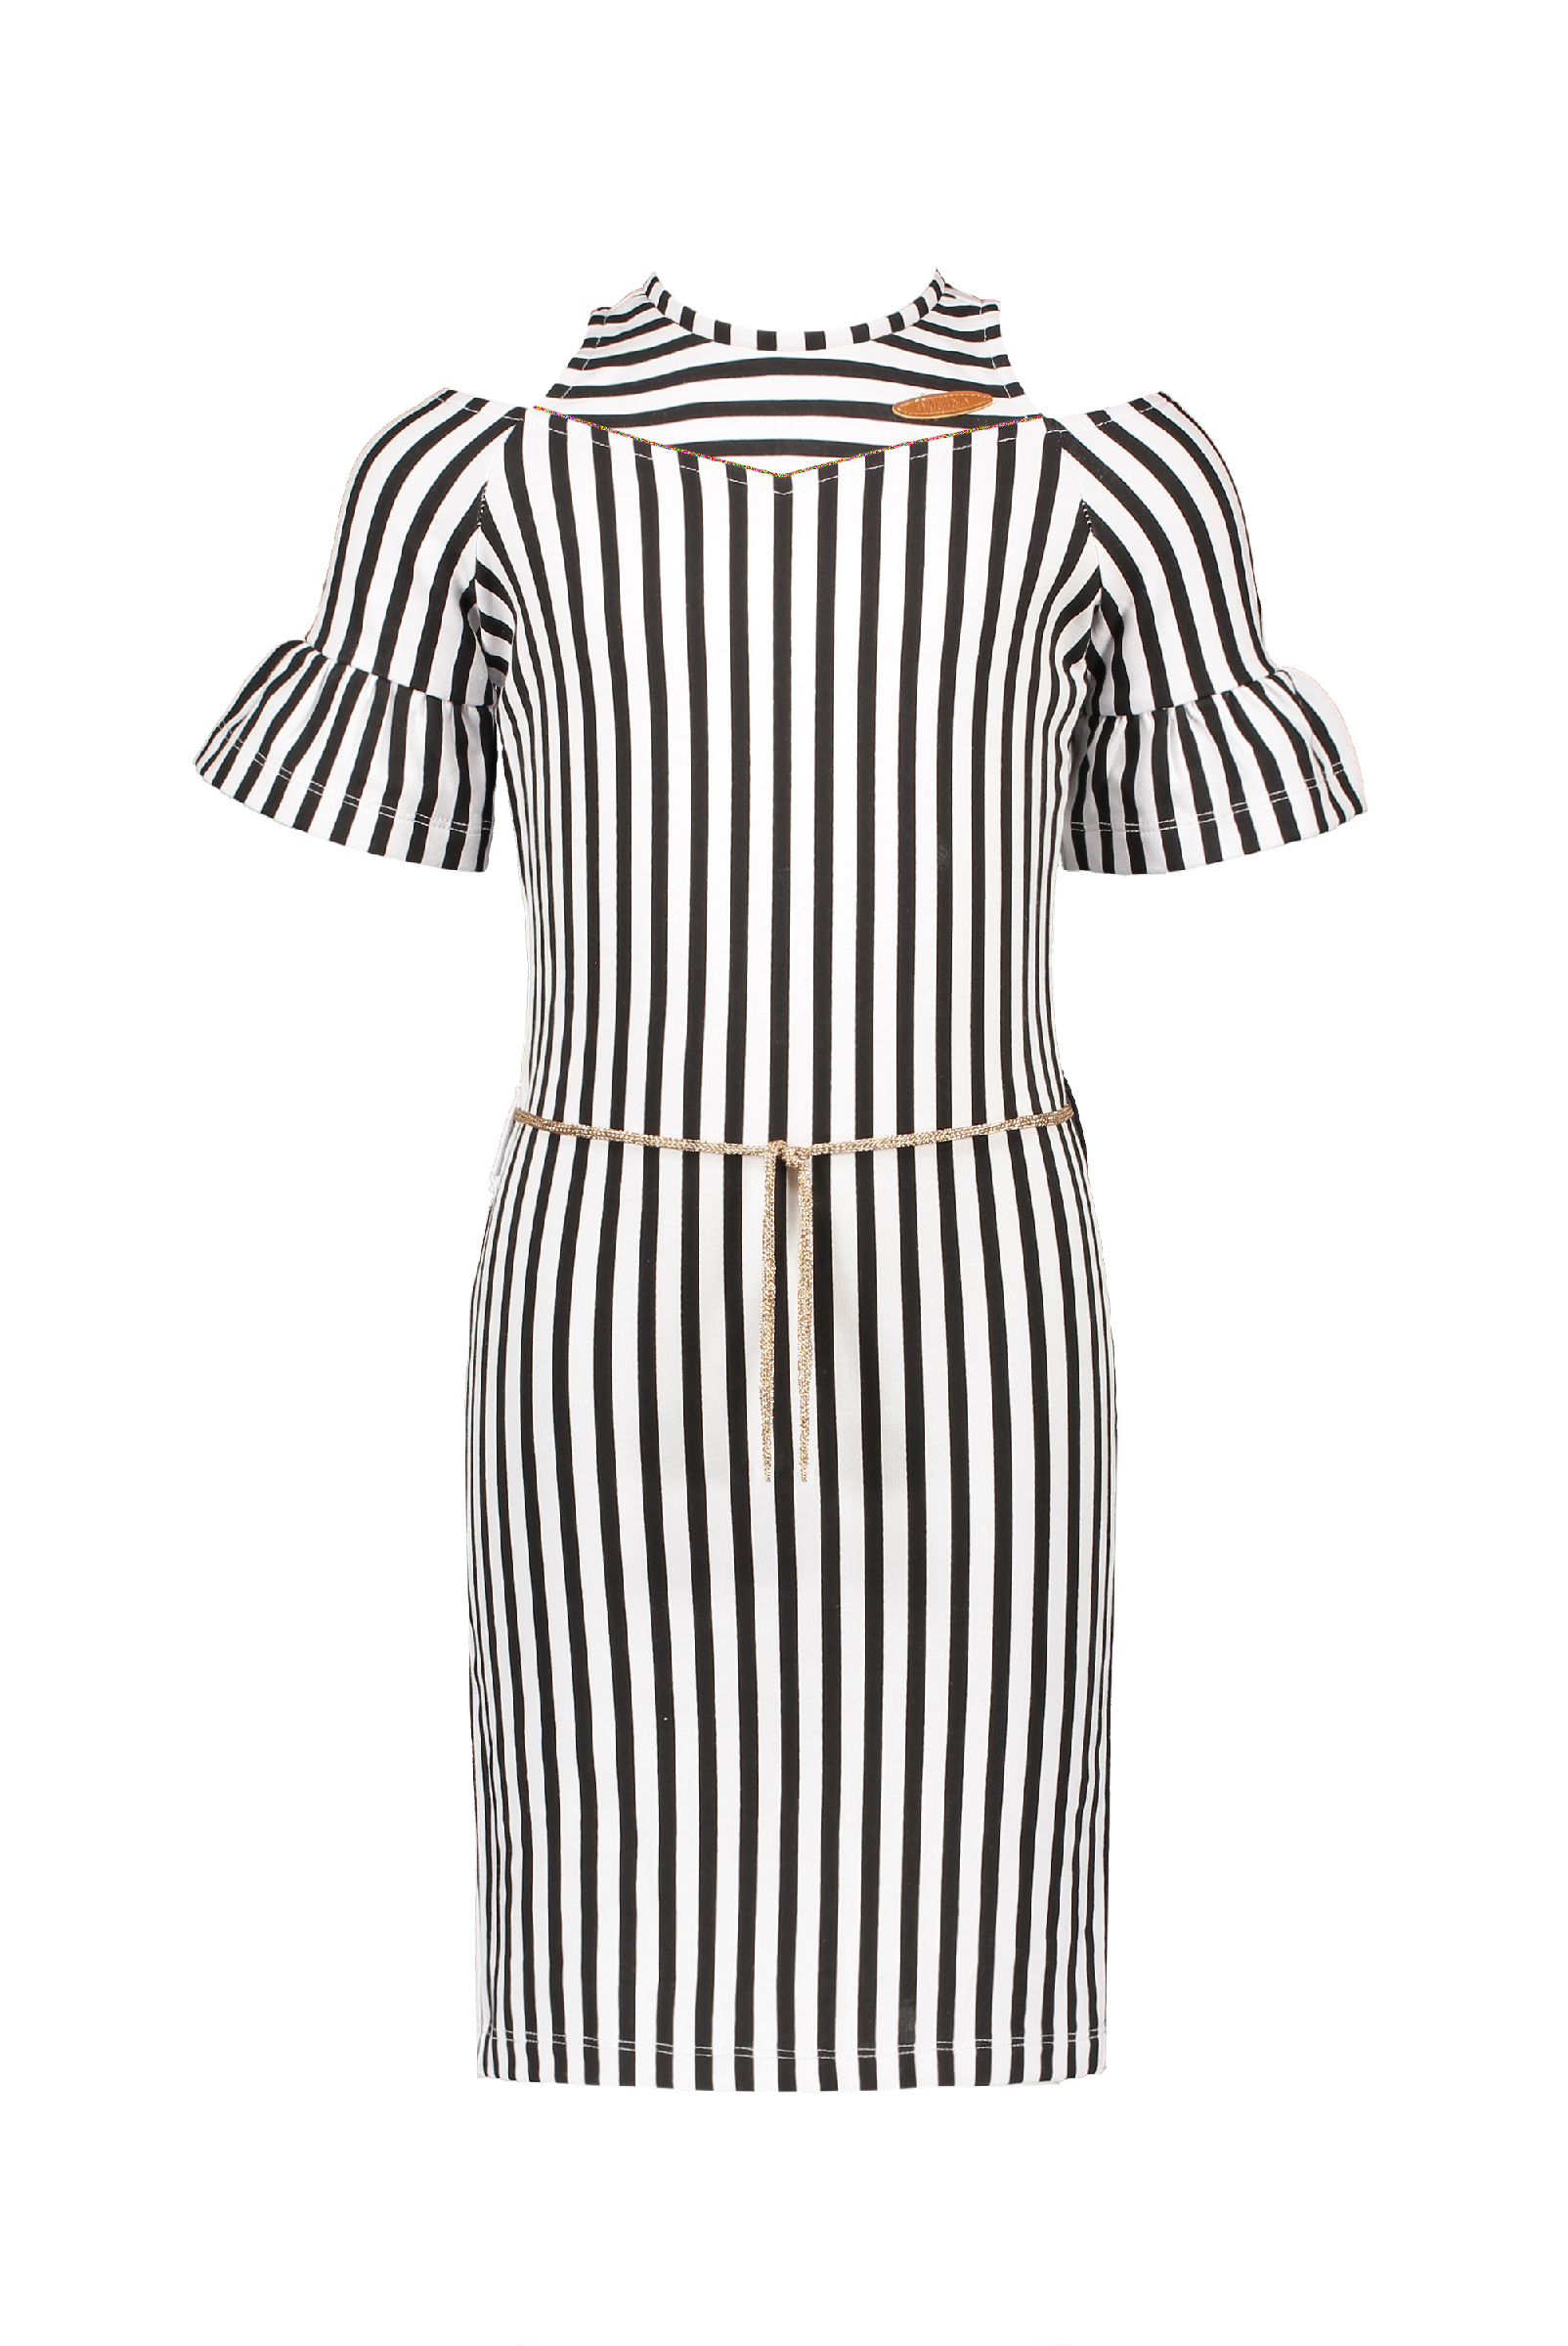 Meisjes Minol Striped cold shldr dress with clock sleeves van NoNo in de kleur Nearly Black in maat 146, 152.